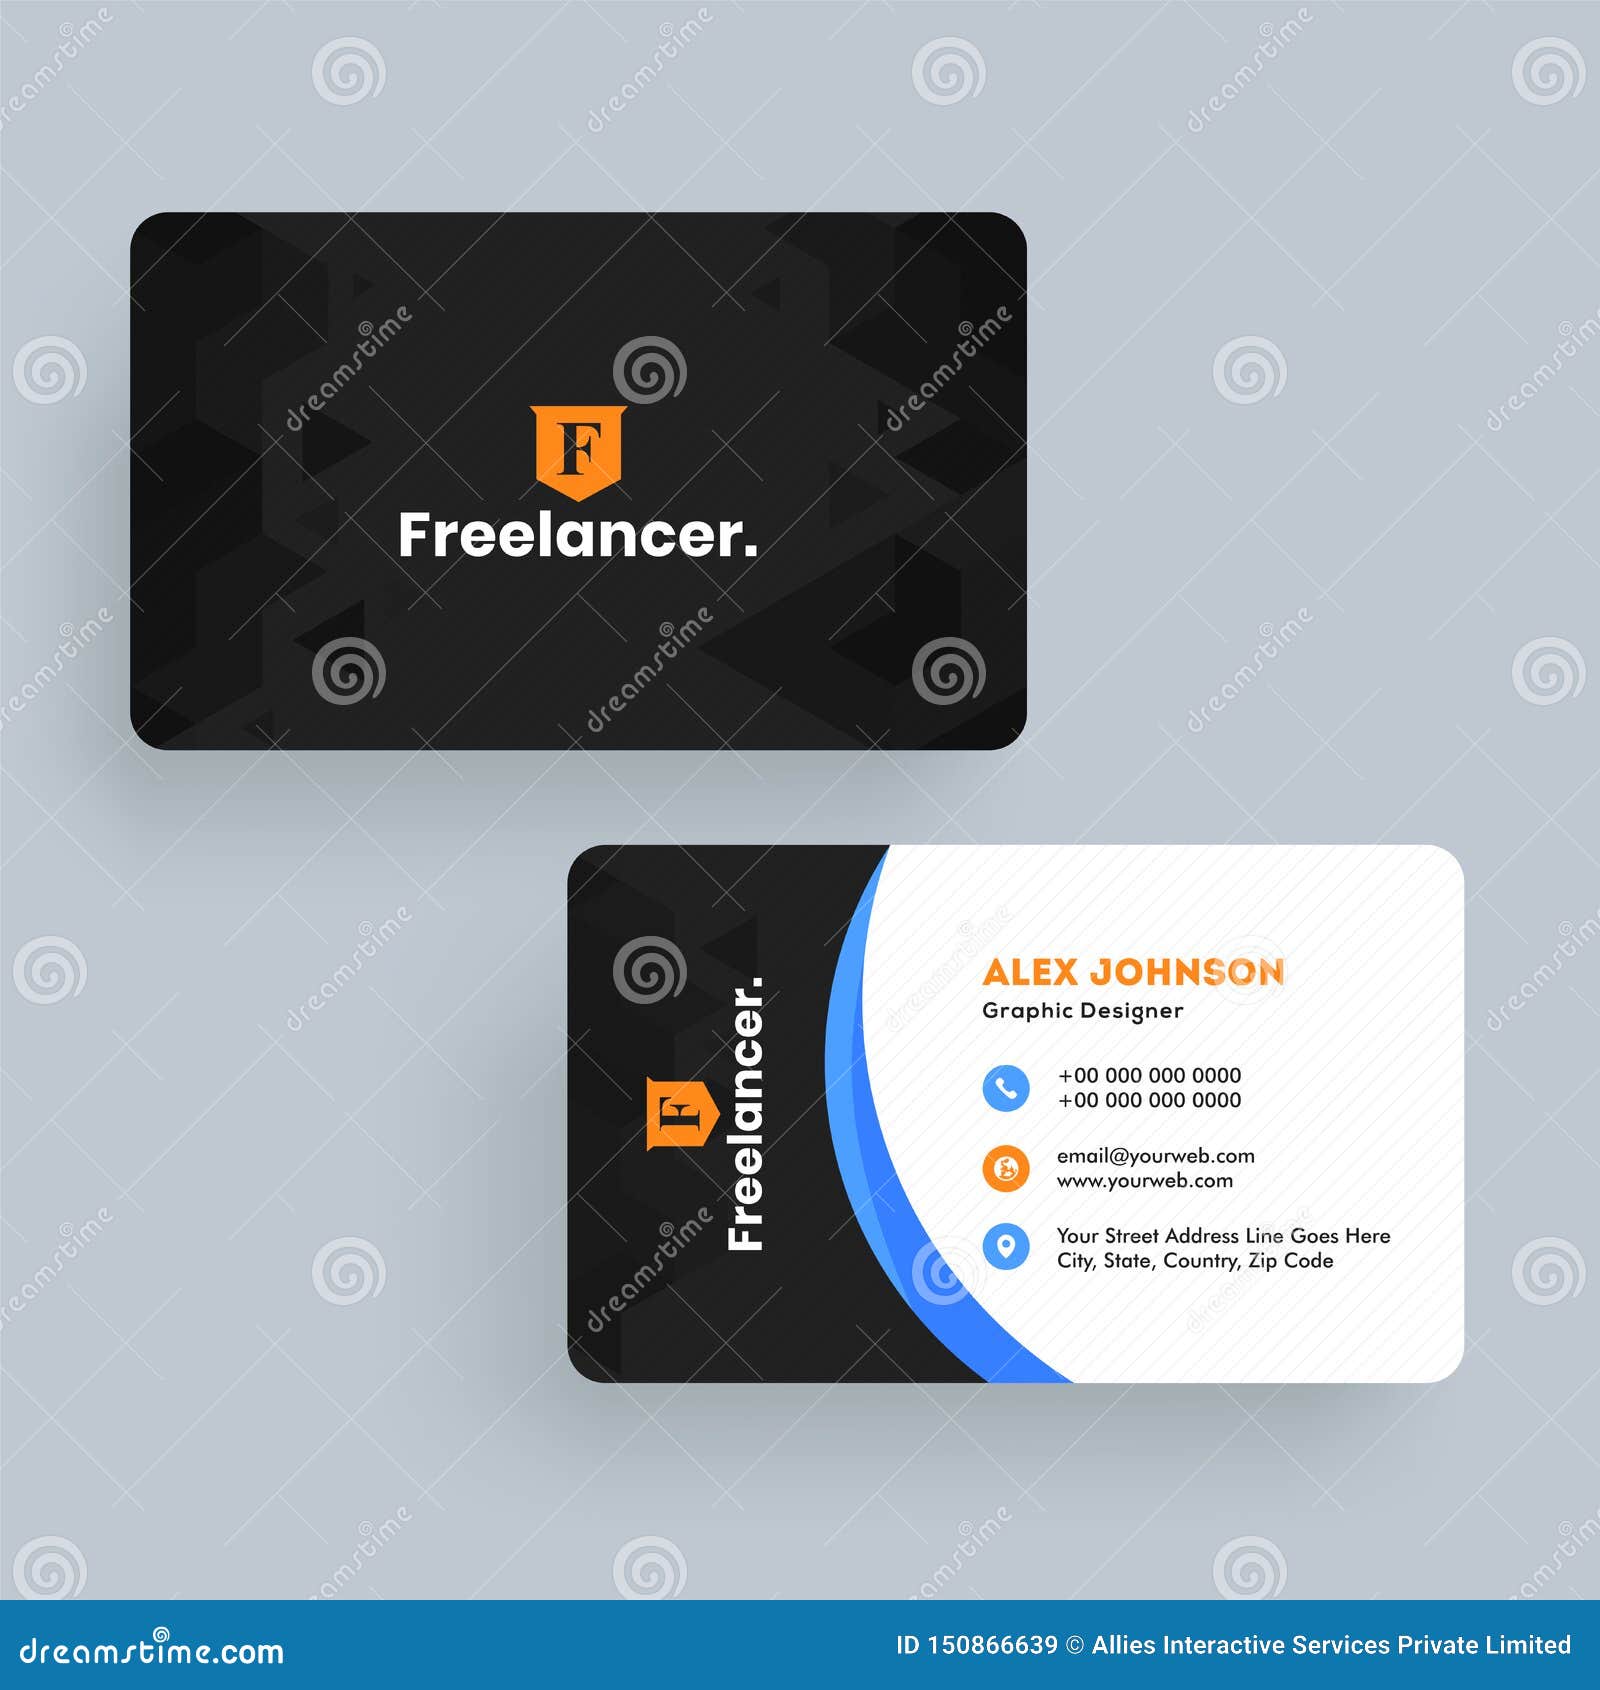 Freelancer Business Card or Horizontal Template Design. Stock Within Freelance Business Card Template